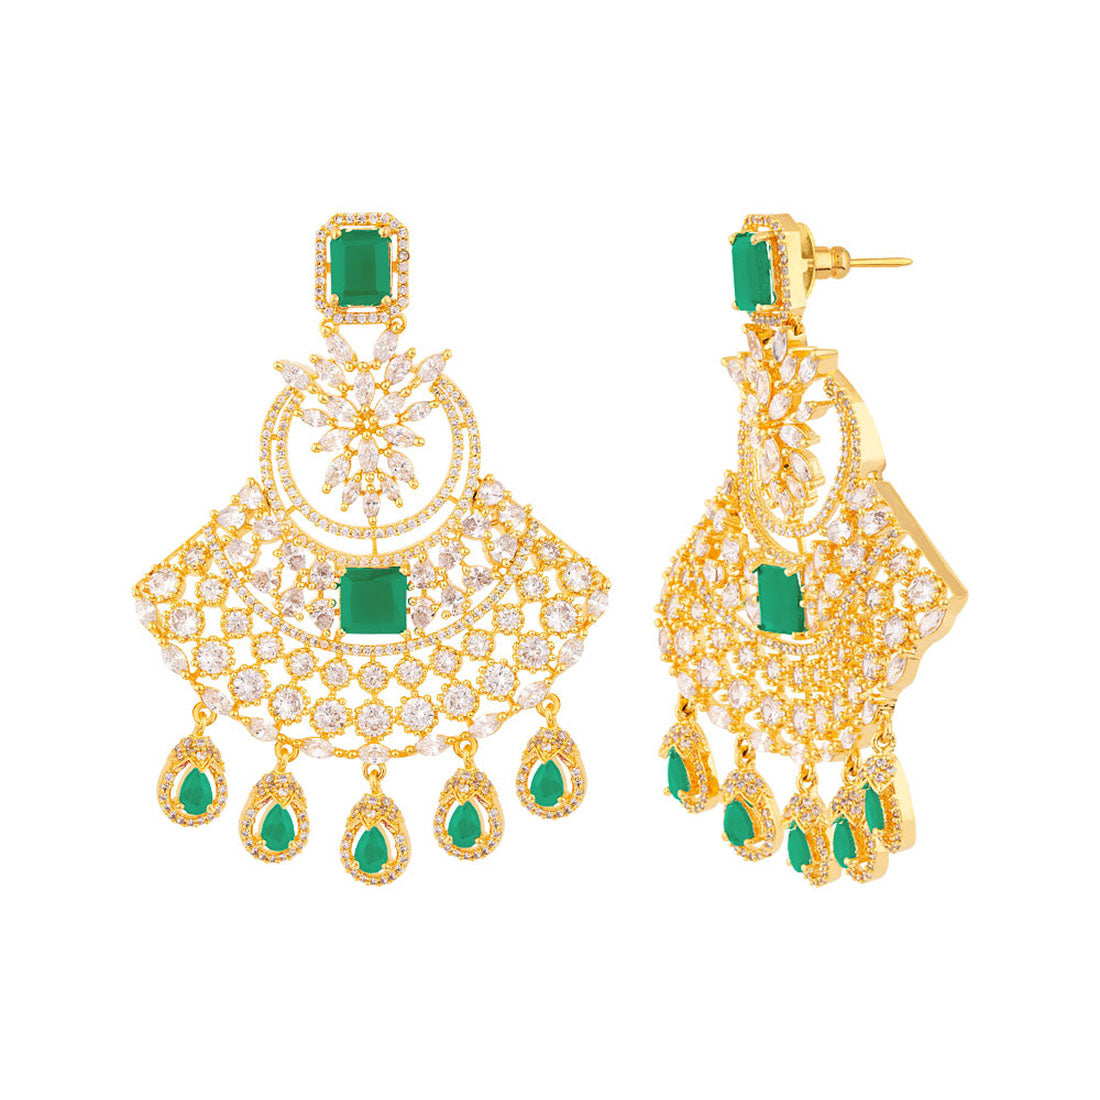 Heavily Embellished Ethnic Inspired Earrings